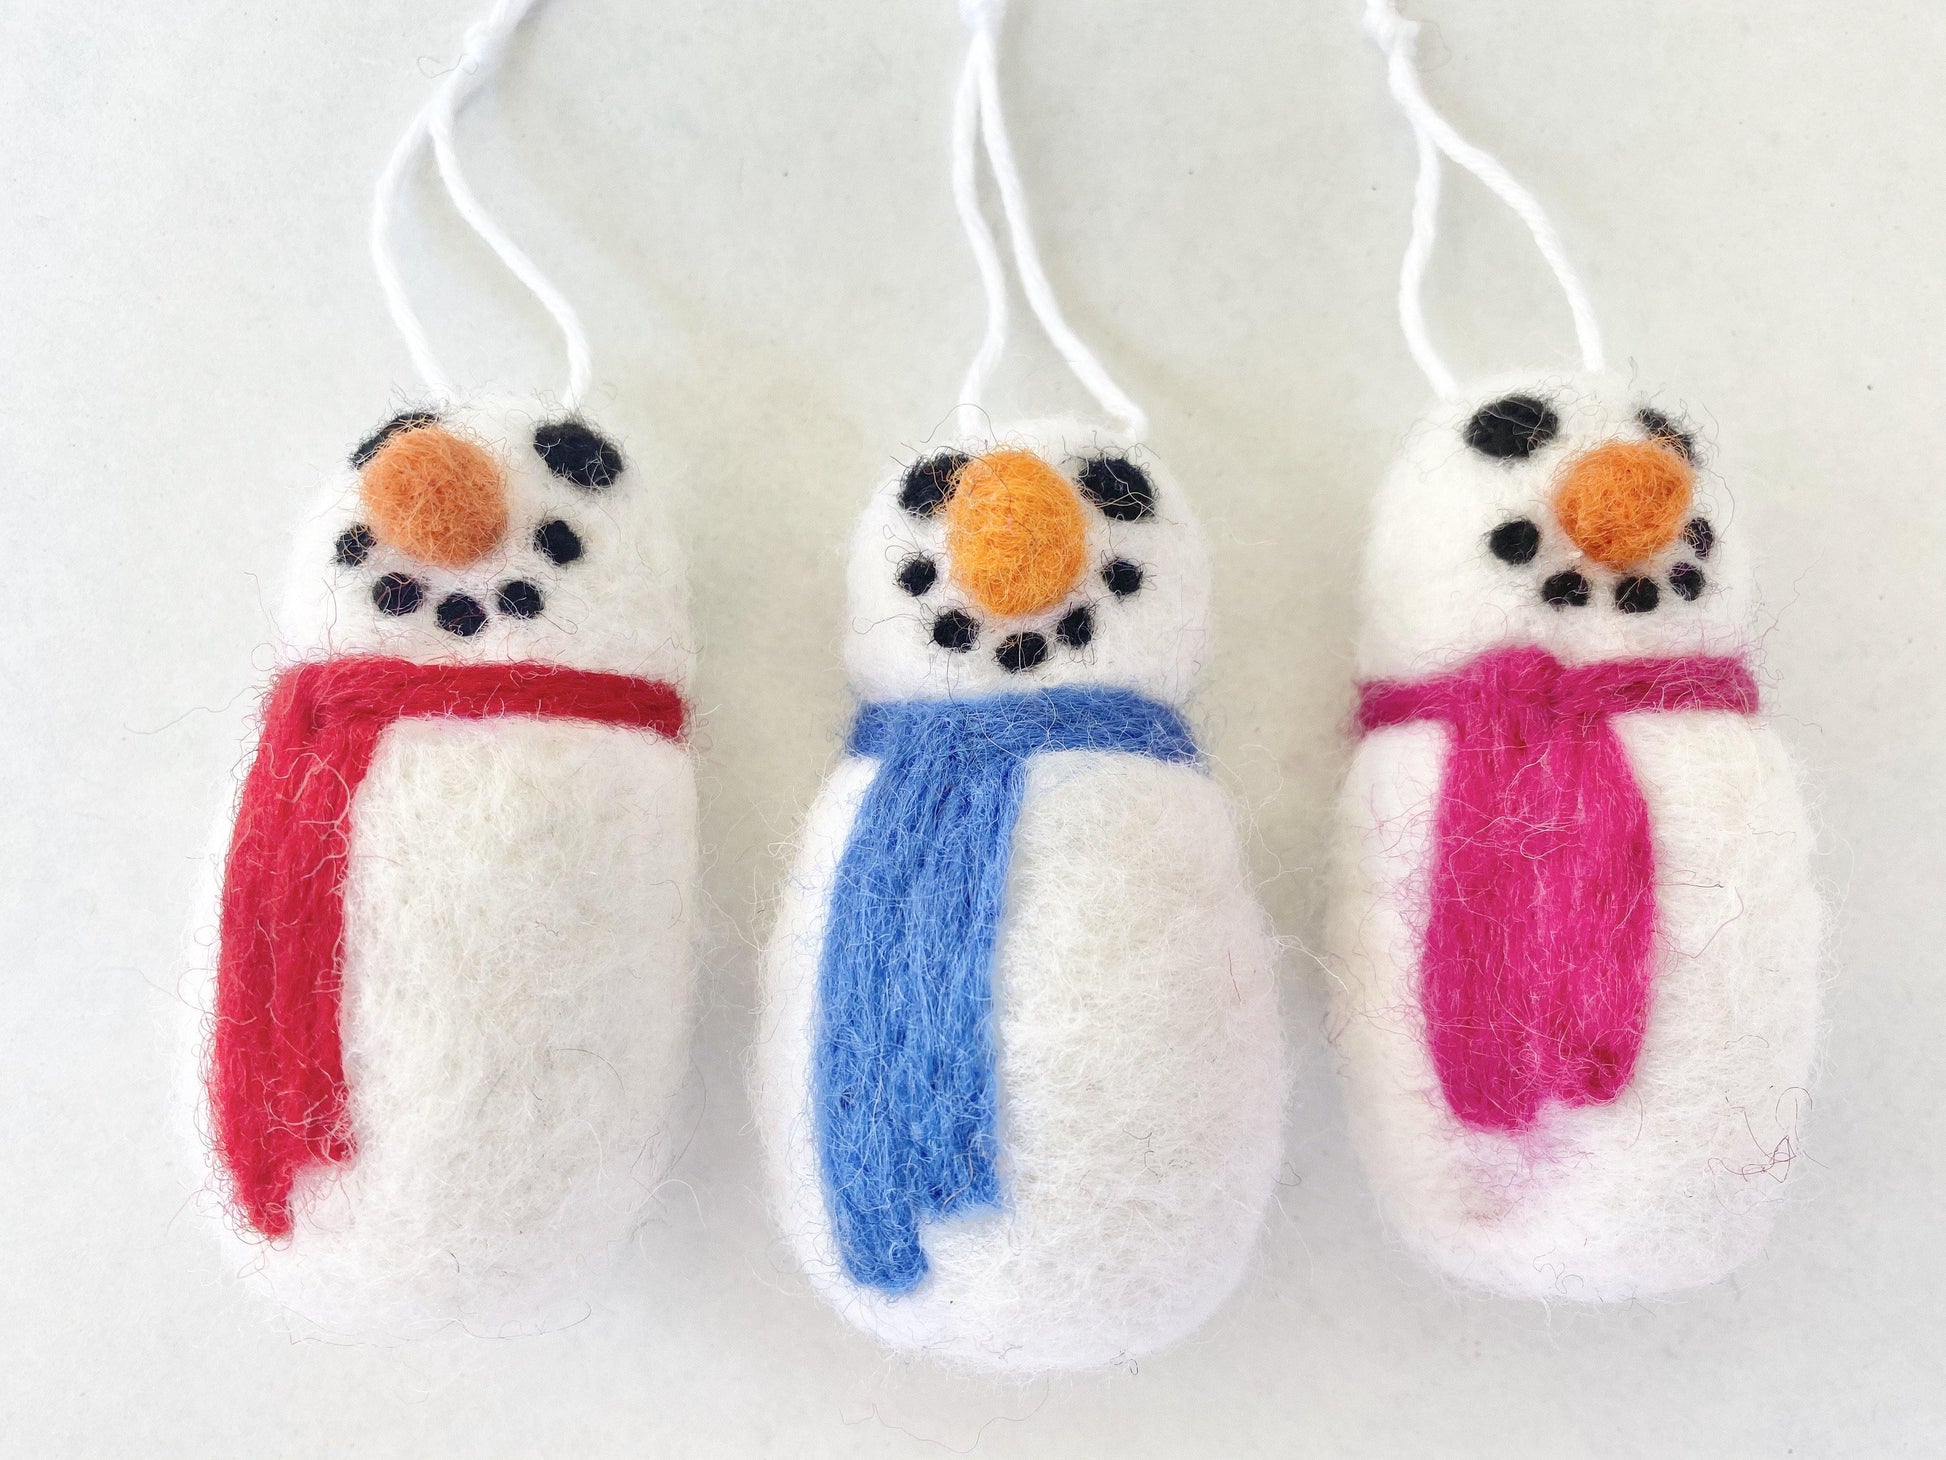 Snowman Felted Ornaments - Redheadnblue